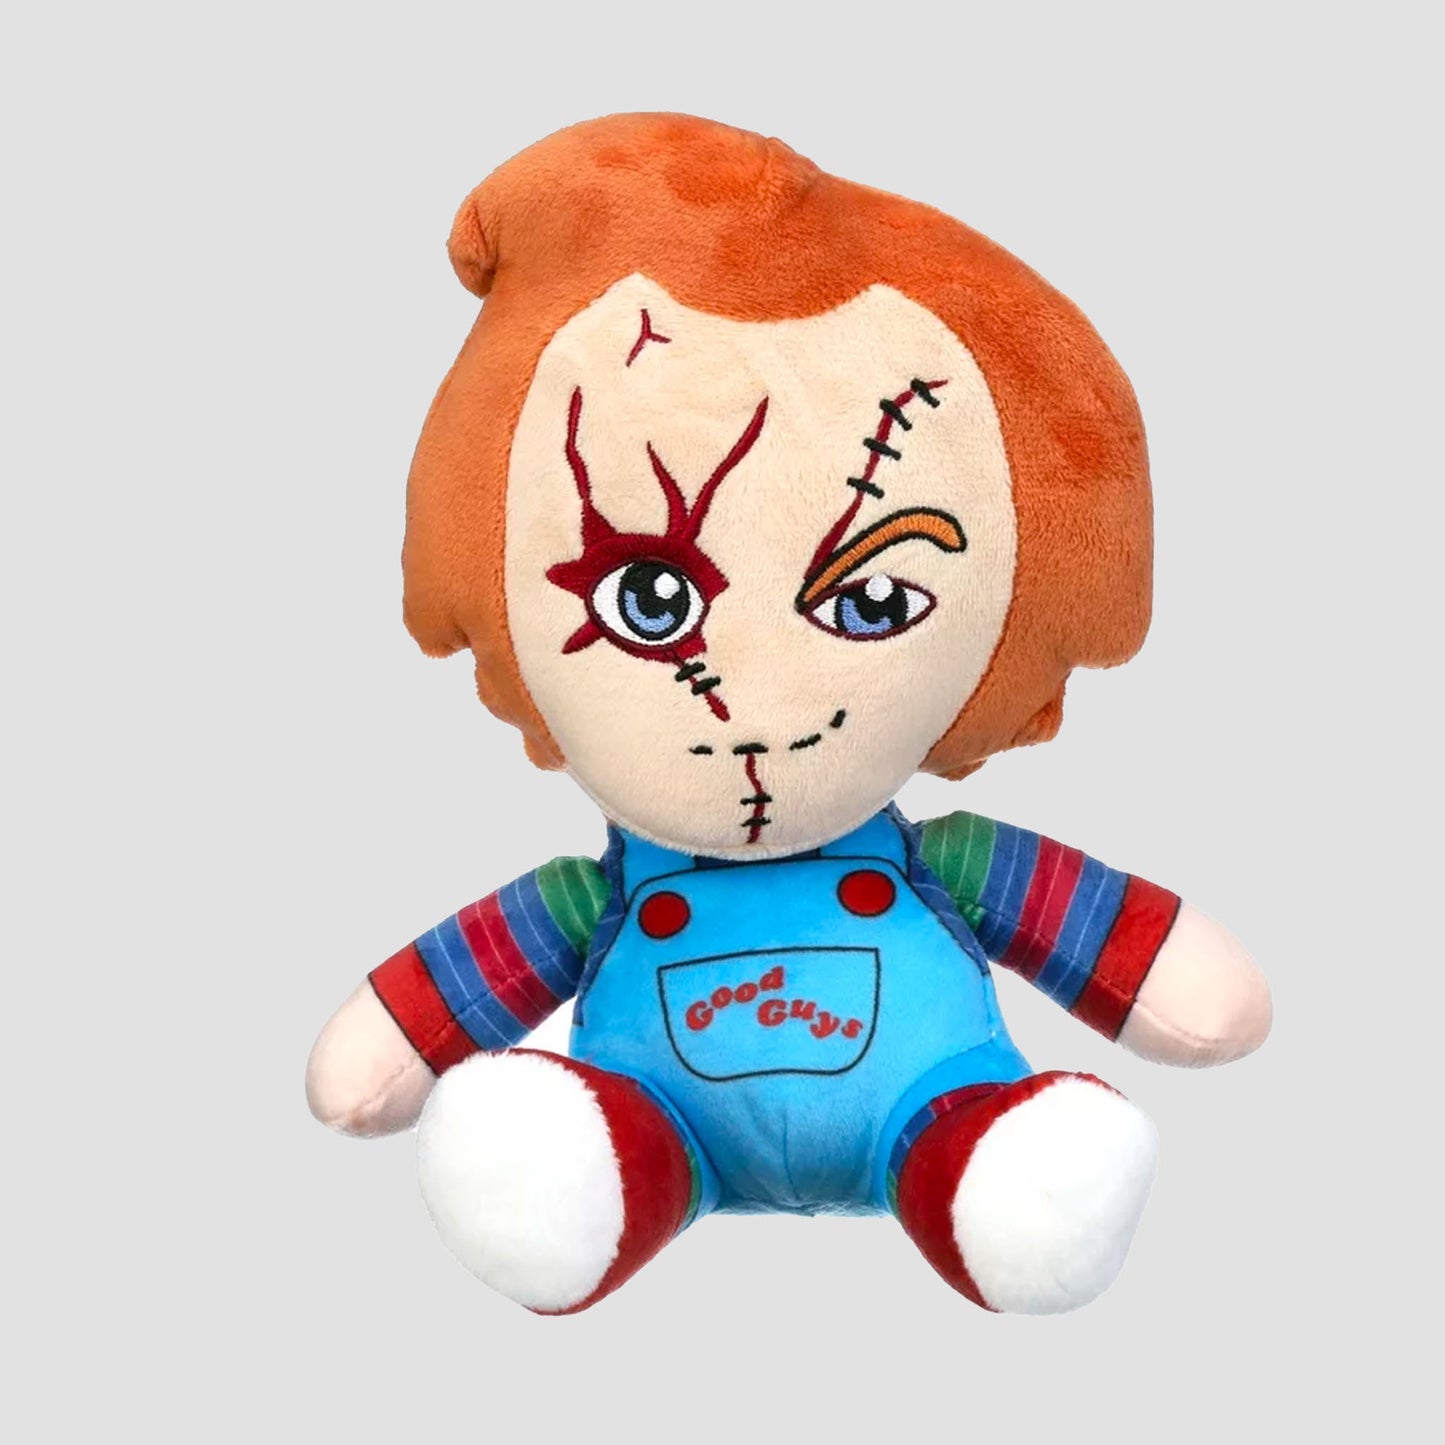 Chucky (Child's Play) 8" Phunny Plush